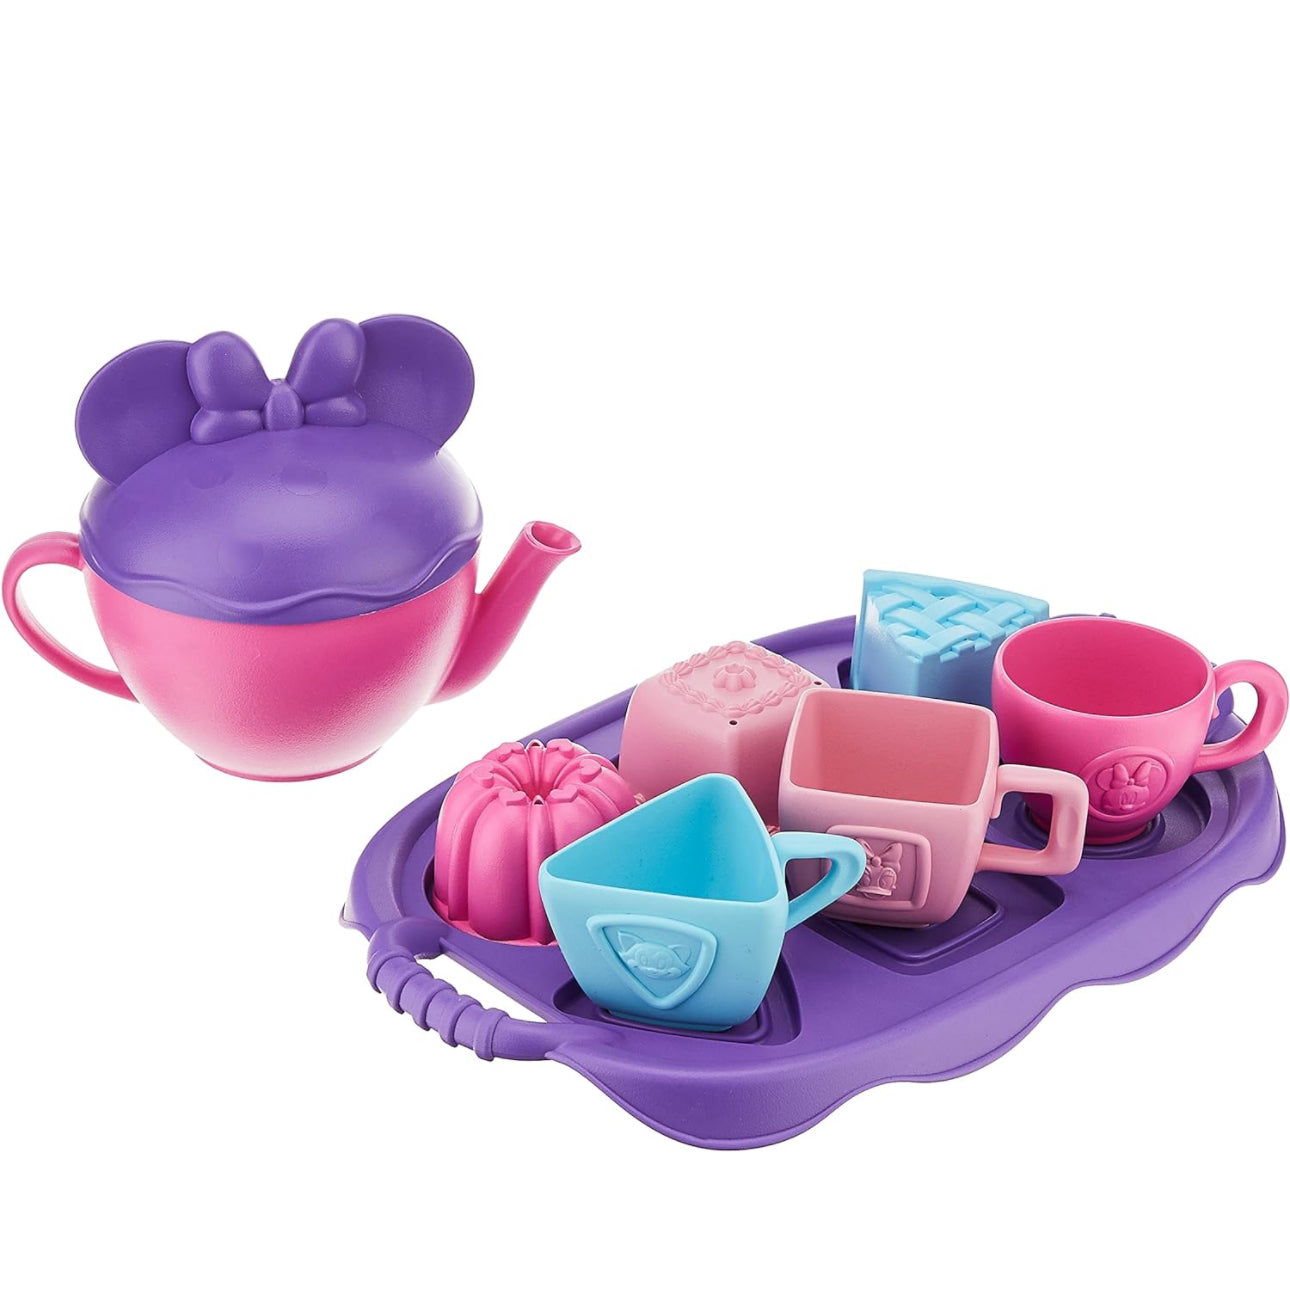 Green Toys x Disney - Minnie Mouse & Friends Tea Party